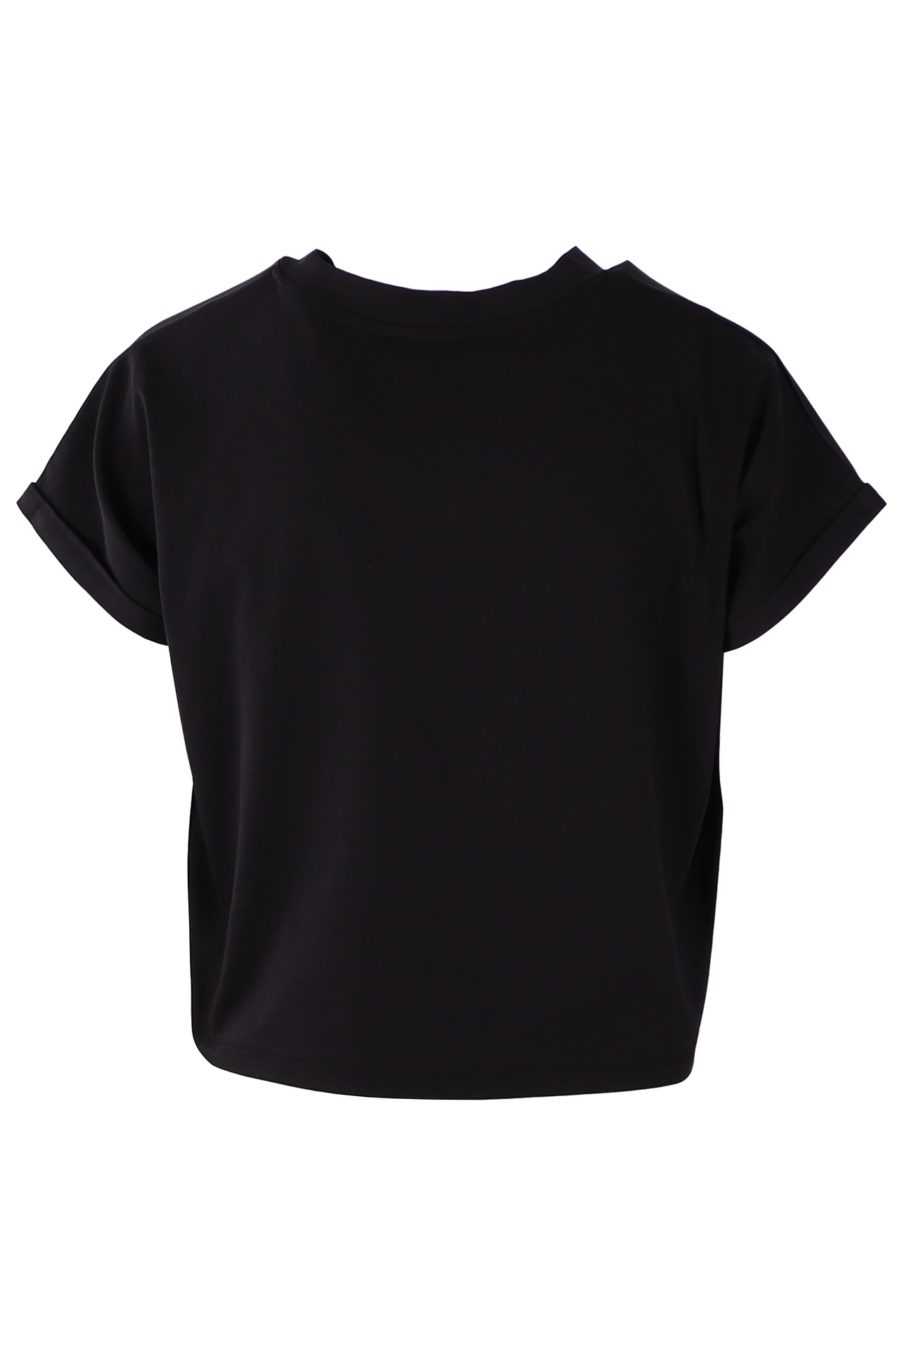 Balmain schwarzes kurzes T-Shirt mit kleinem Logo - fc1a3e27cebc87179f13cbd8178bc6b782646bba